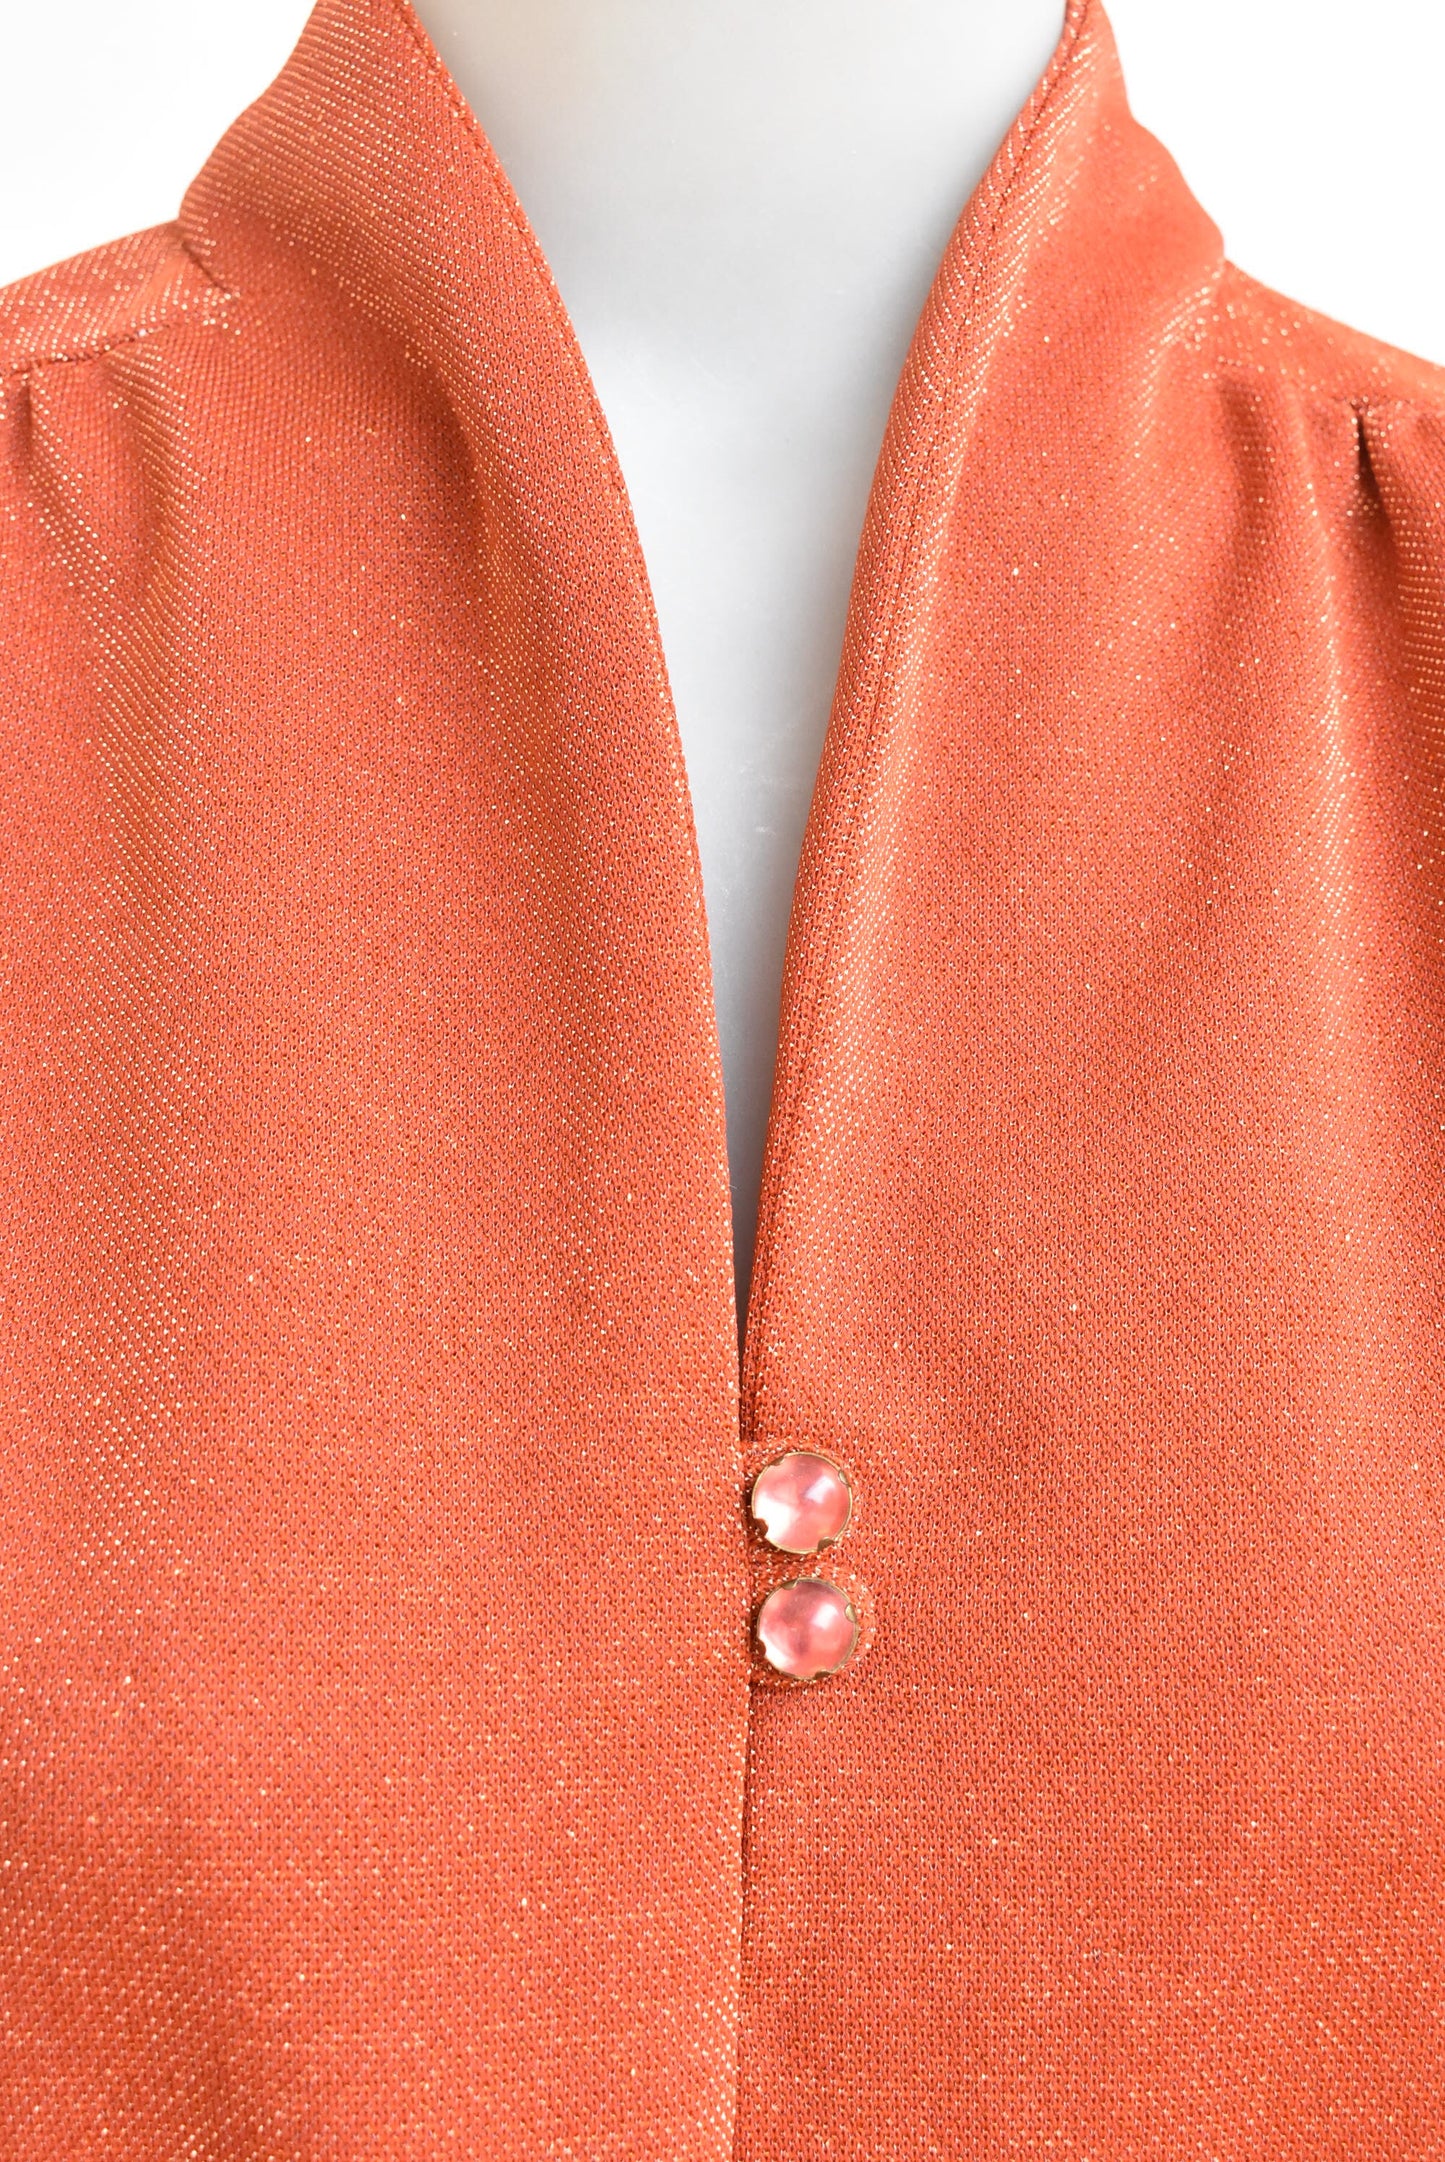 Handmade 1980 polyester/lurex orange shift frock, pockets